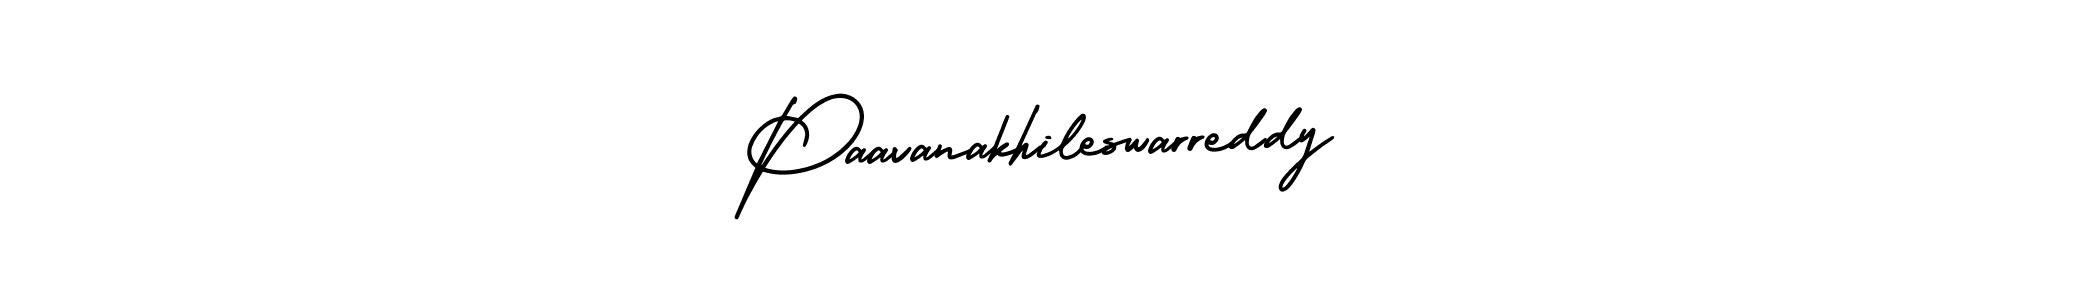 Best and Professional Signature Style for Paavanakhileswarreddy. AmerikaSignatureDemo-Regular Best Signature Style Collection. Paavanakhileswarreddy signature style 3 images and pictures png